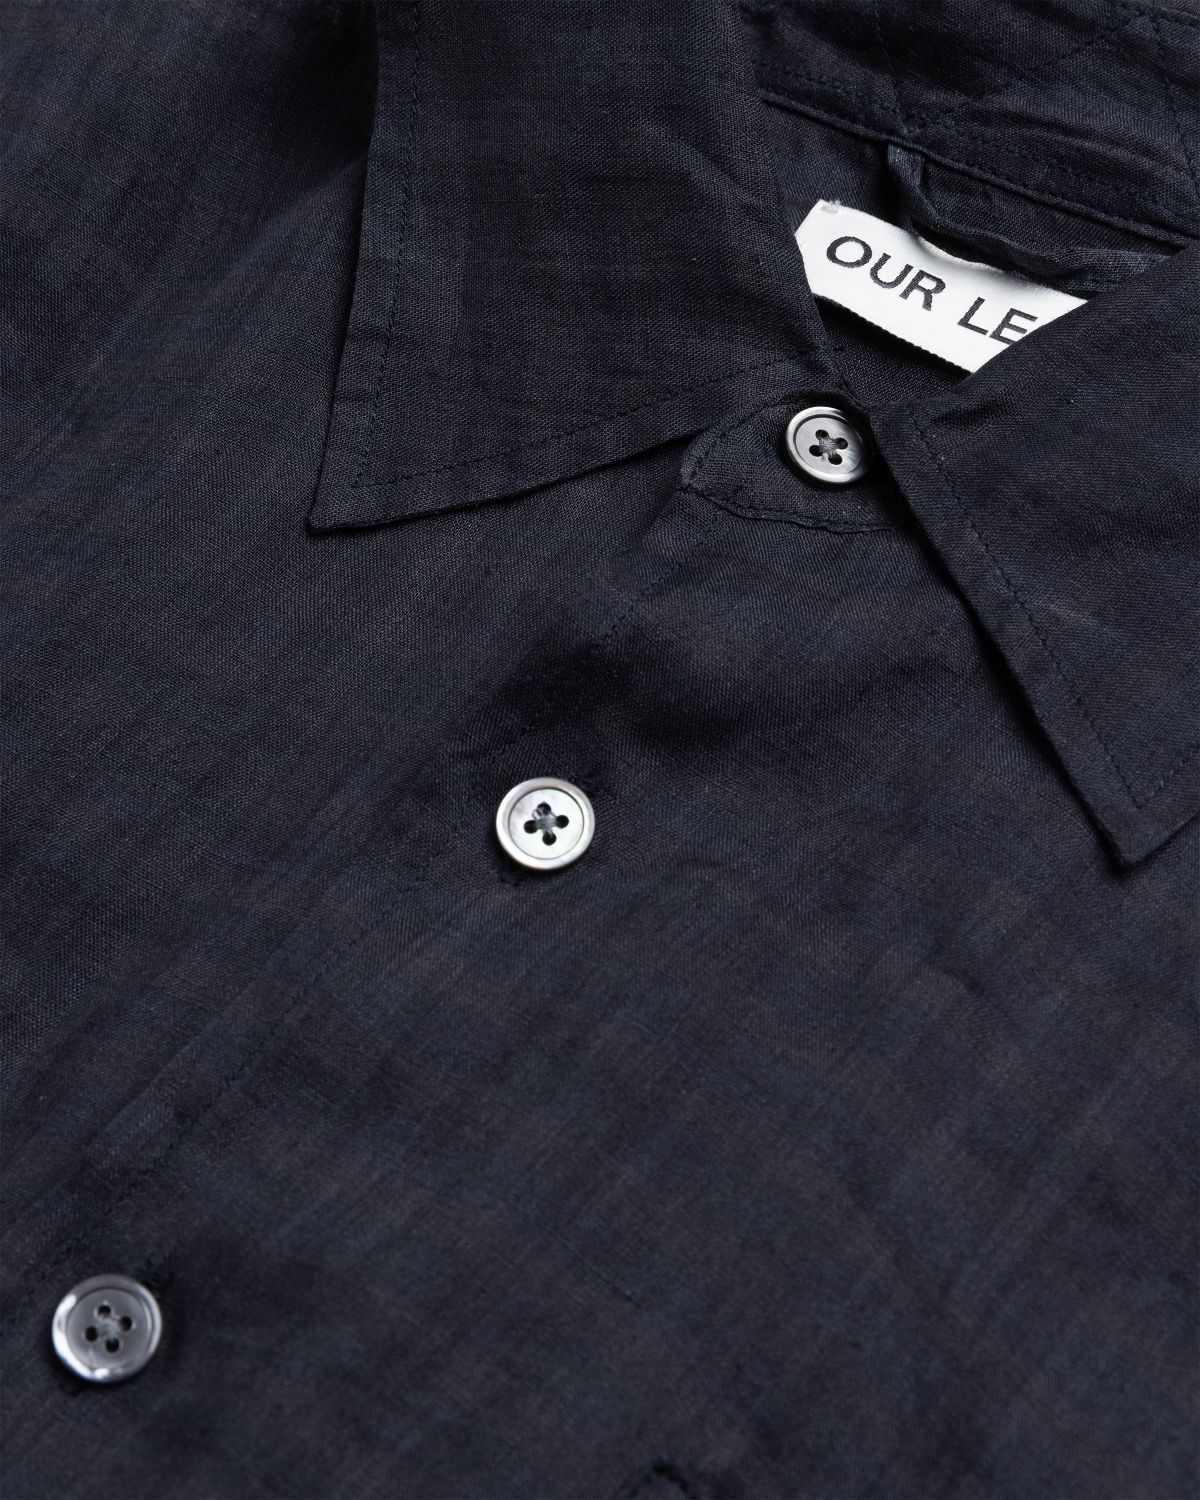 Our Legacy – Above Shirt Night Check Print - Shirts - Black - Image 6